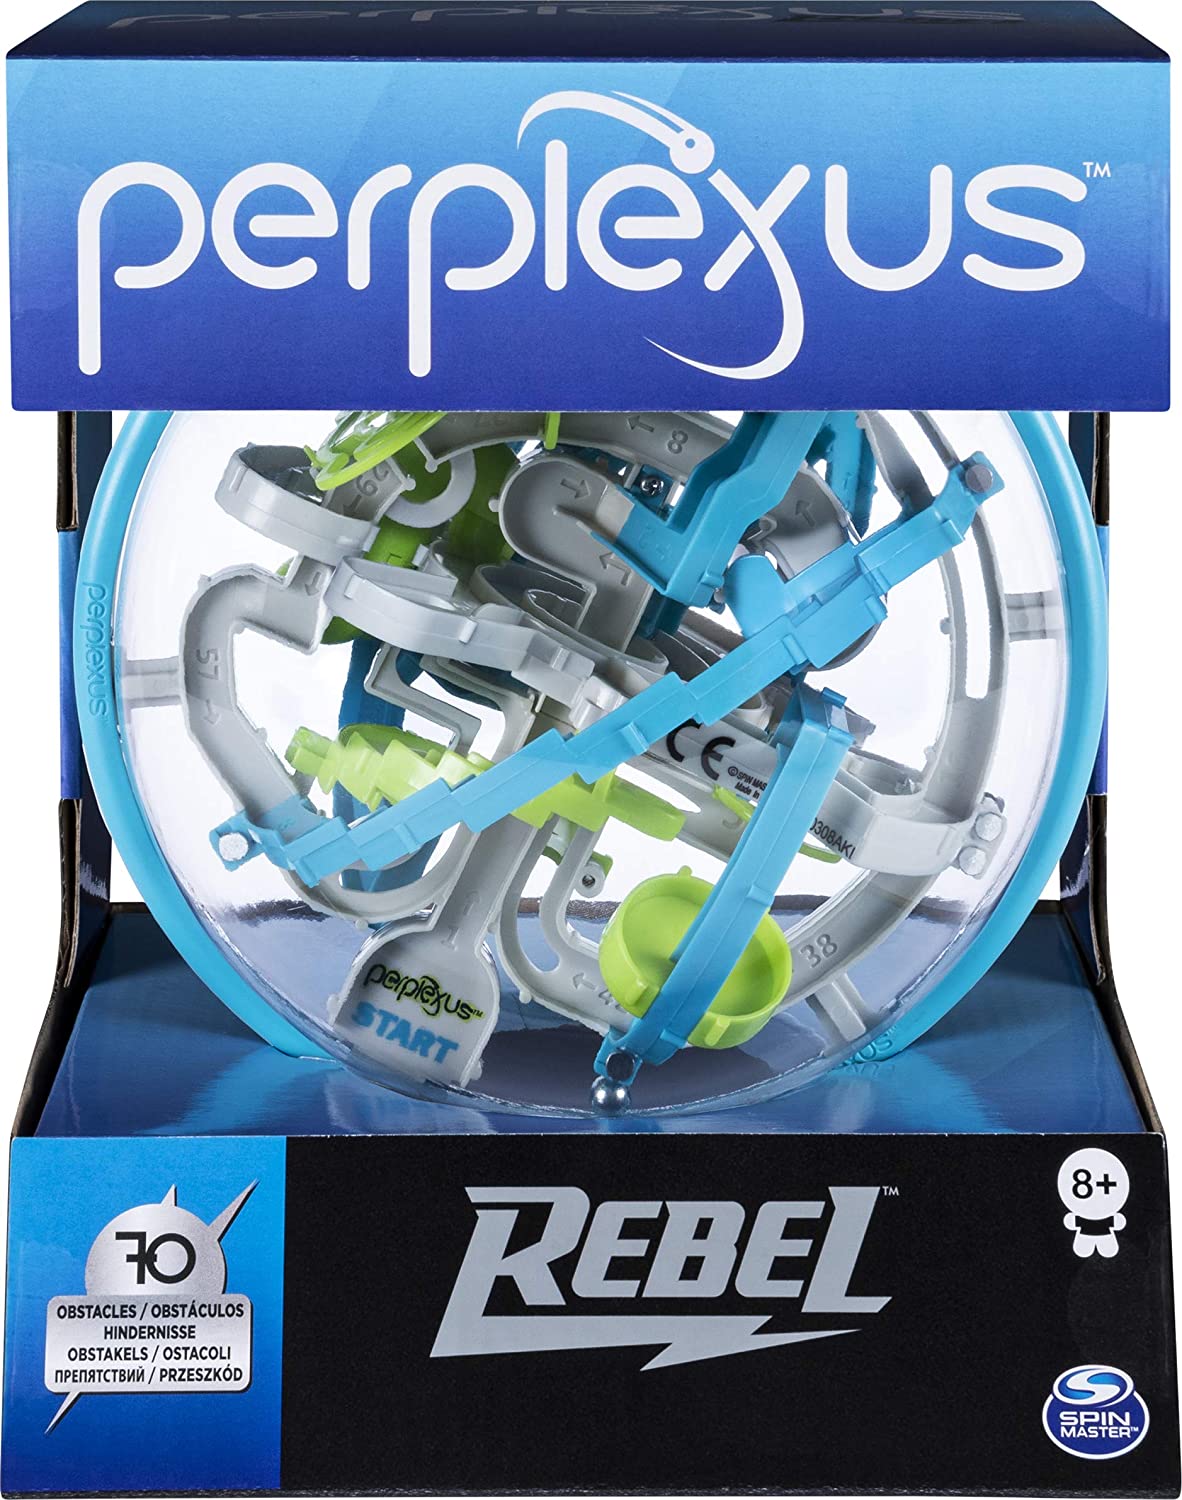 Perplexus: Rookie Review 683e7a76296a - Videos - Perplexus: Original (2009)  - Abstract Games - 1jour-1jeu.com